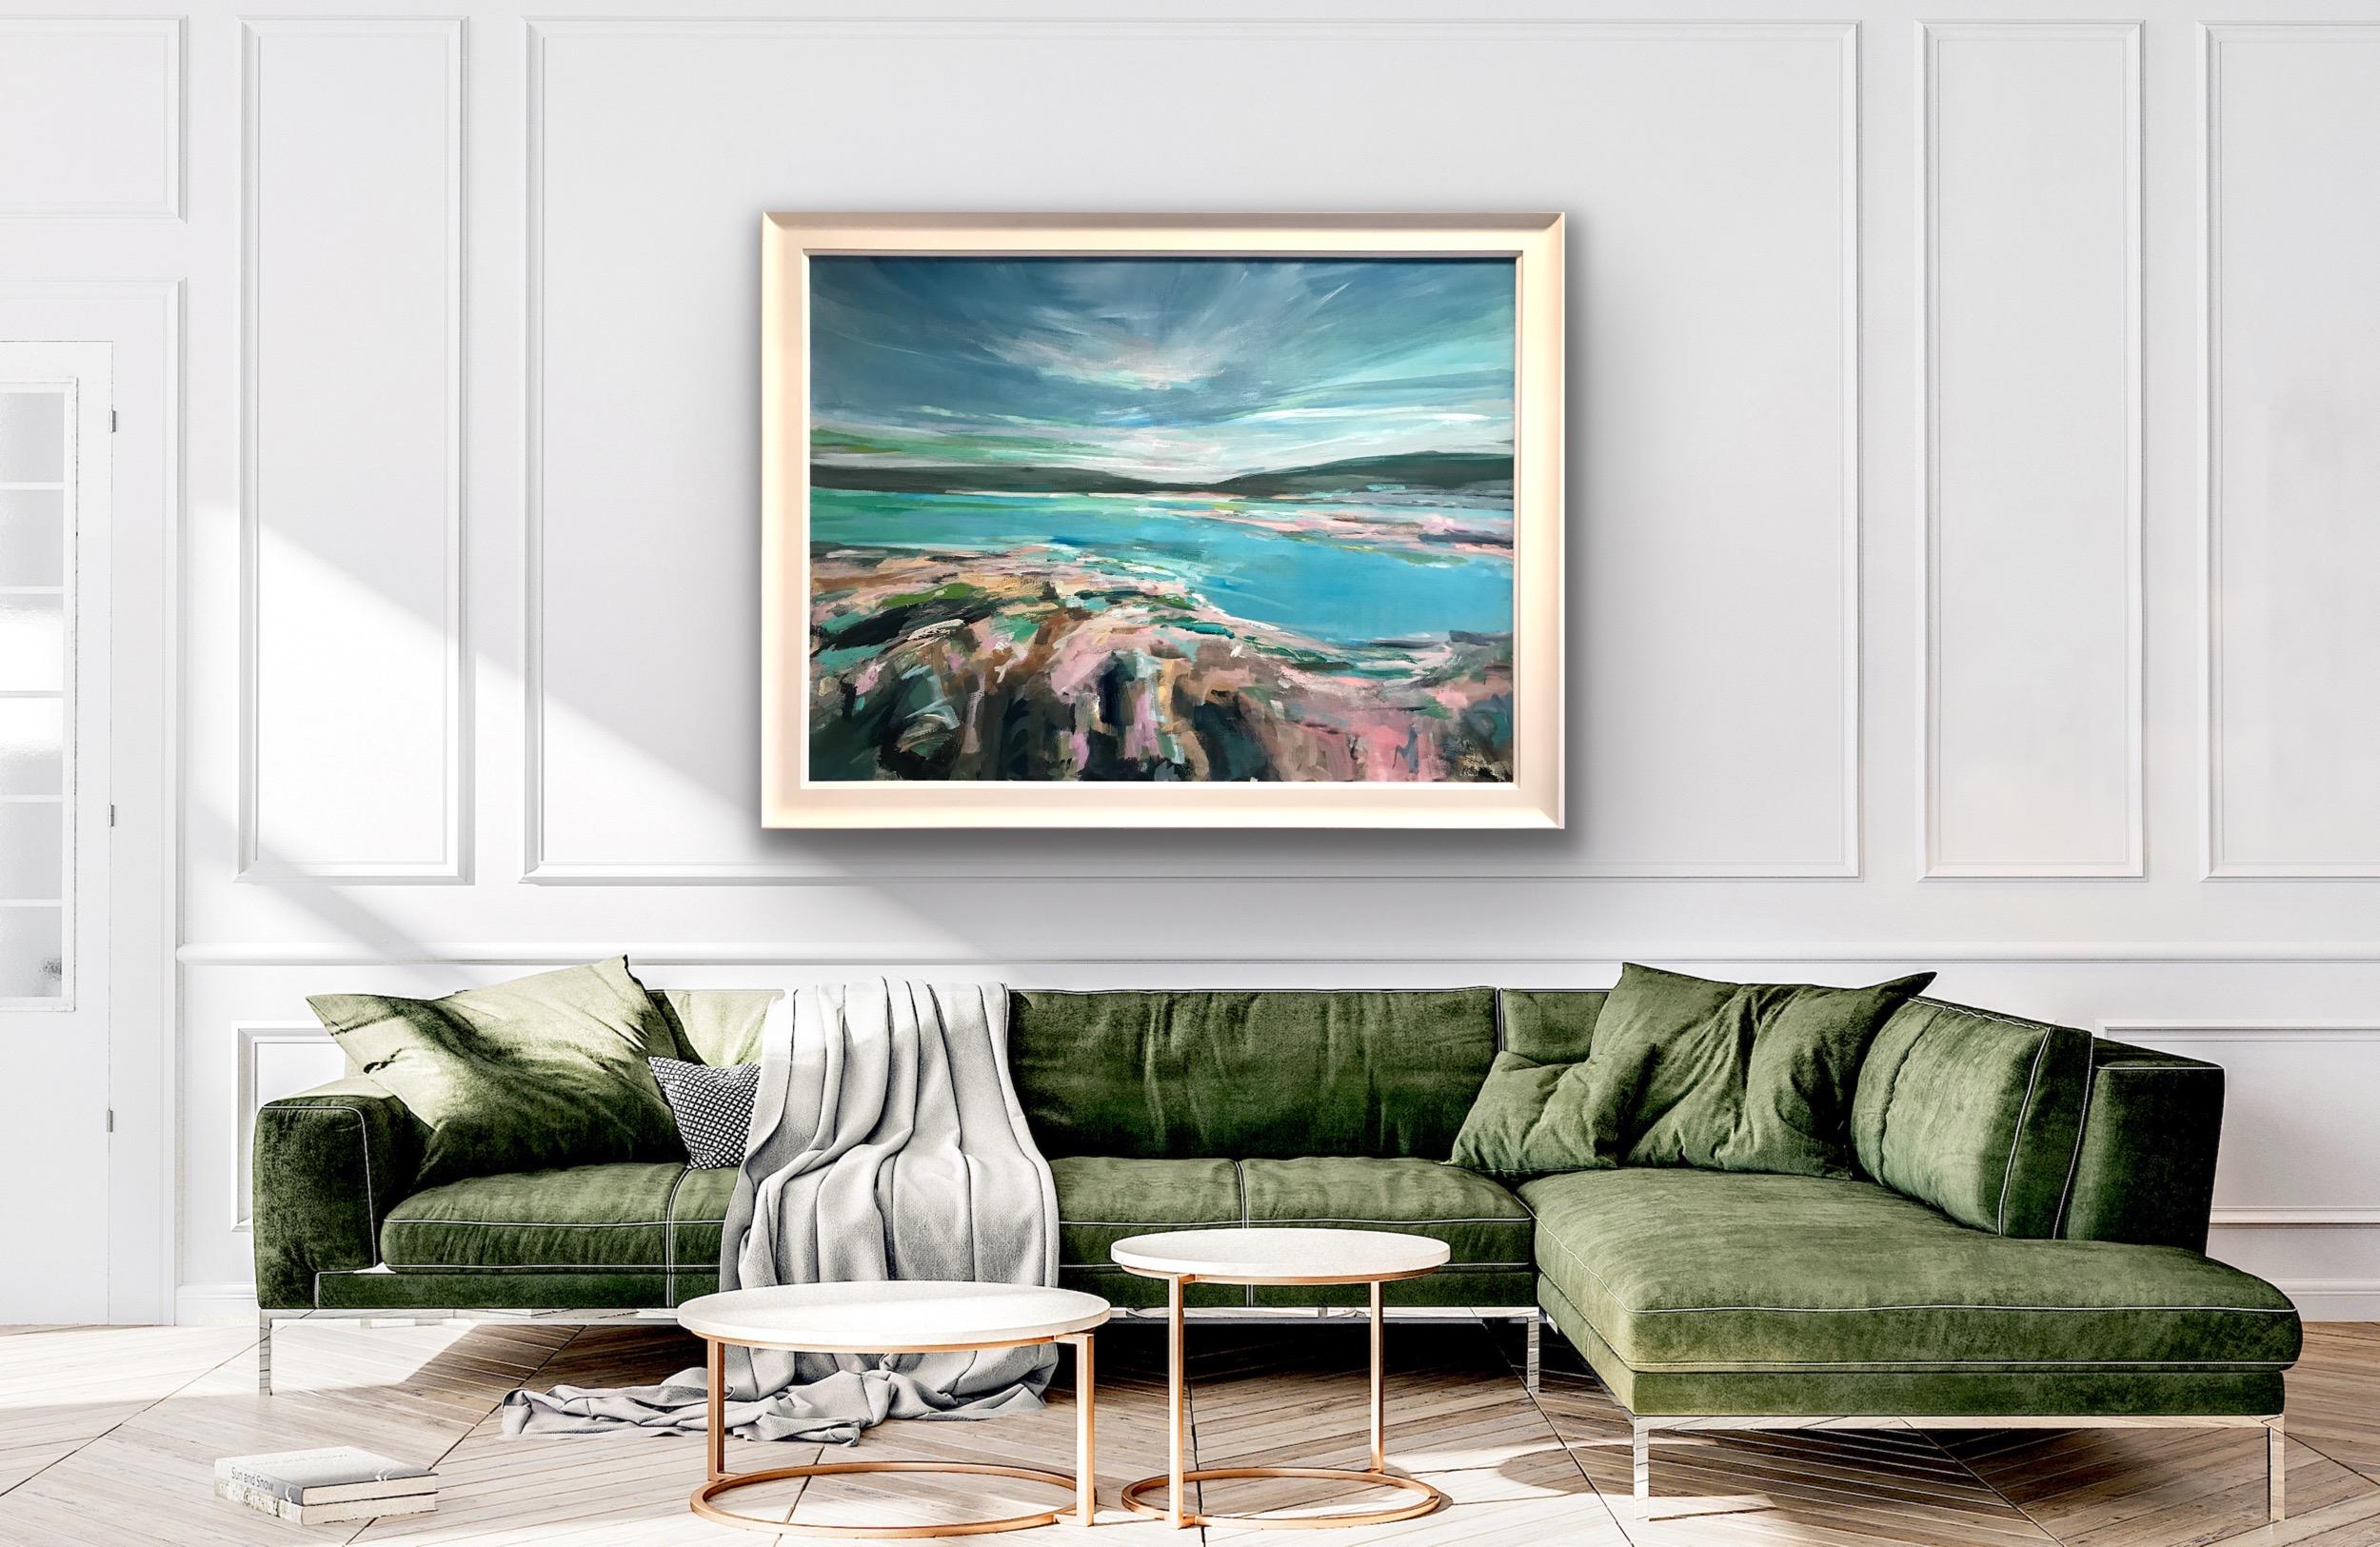 Whispering Sky, River Clyde, Scotland, Original painting, Seascape, Contemporary - Painting de Mary McDonald